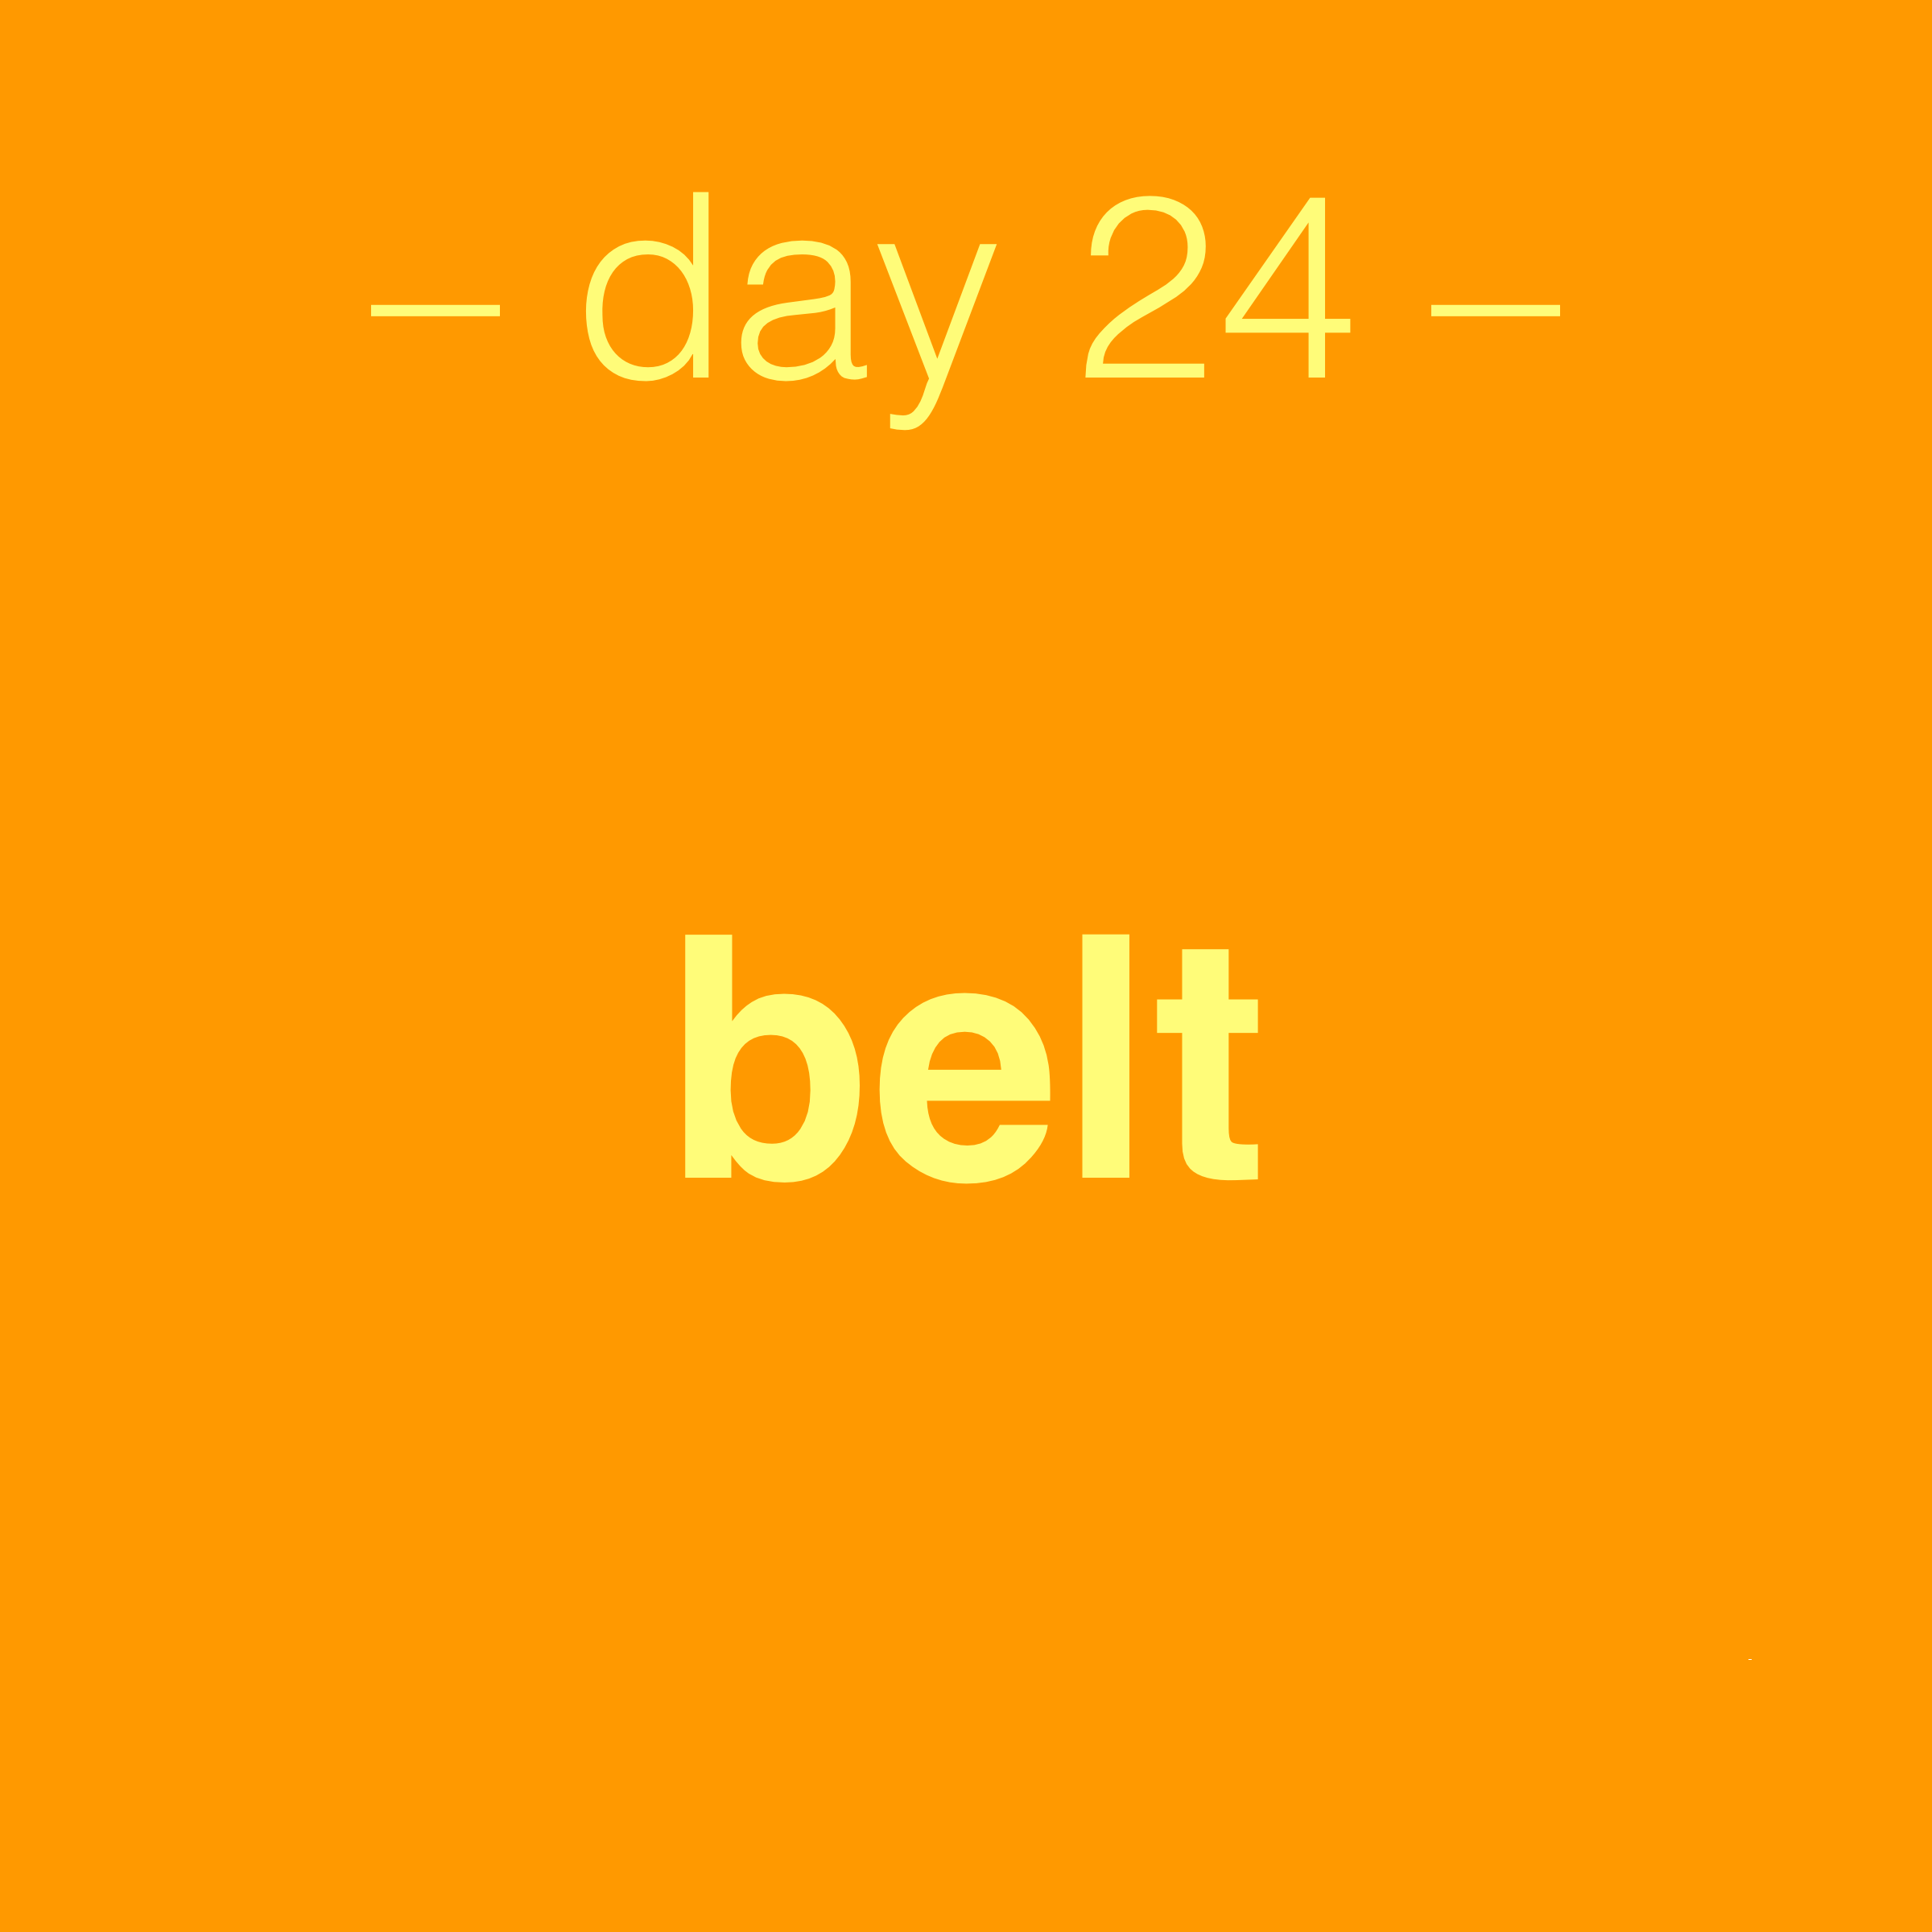 day 24 - belt